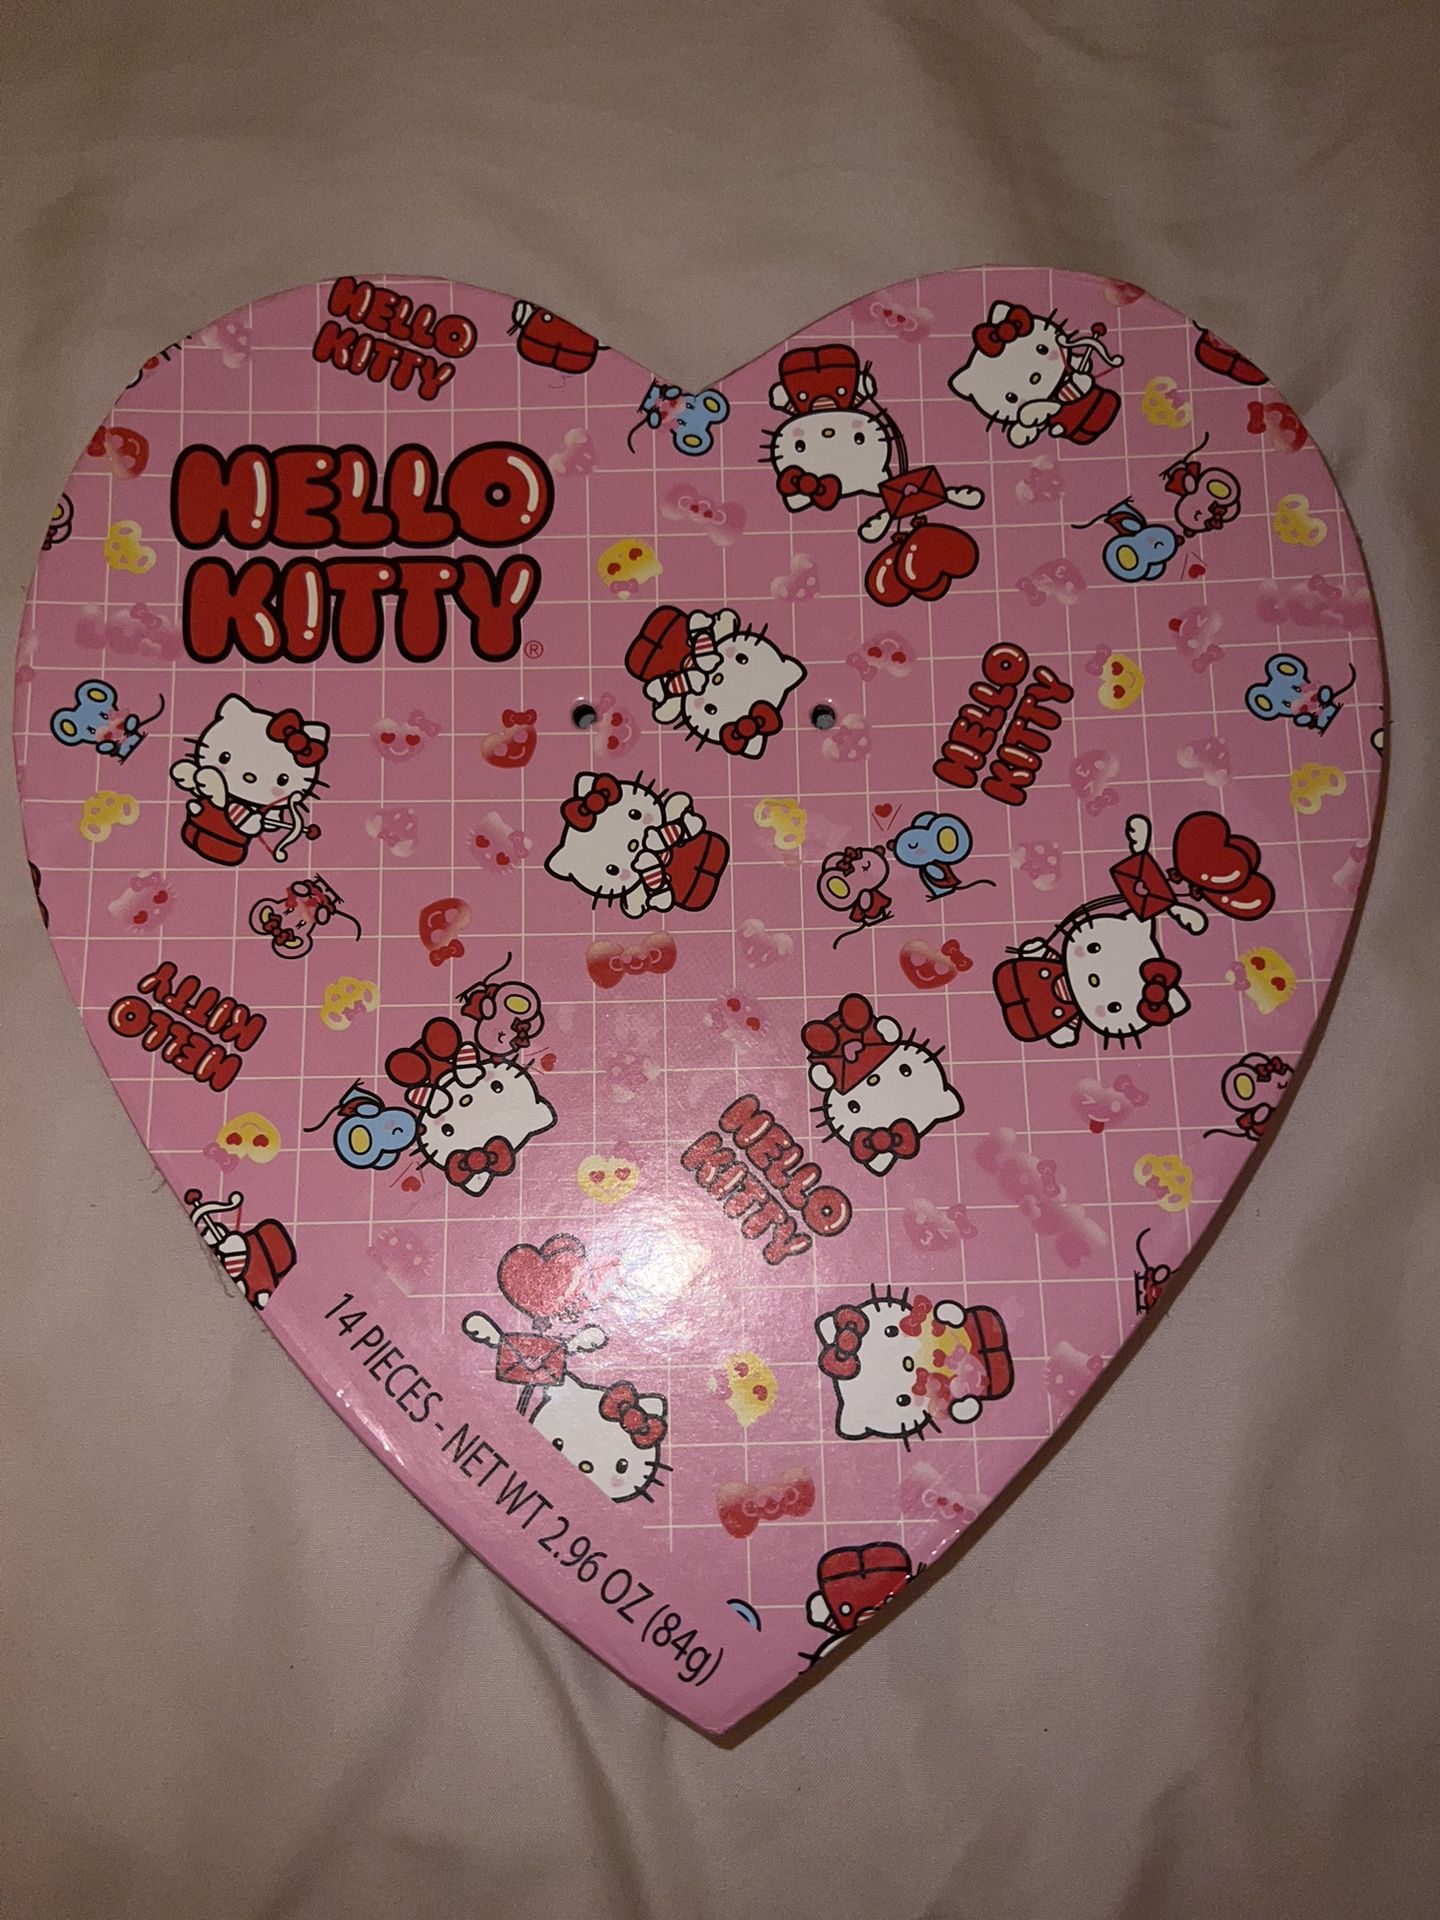 hello kitty valentine’s day heart shaped box cover 